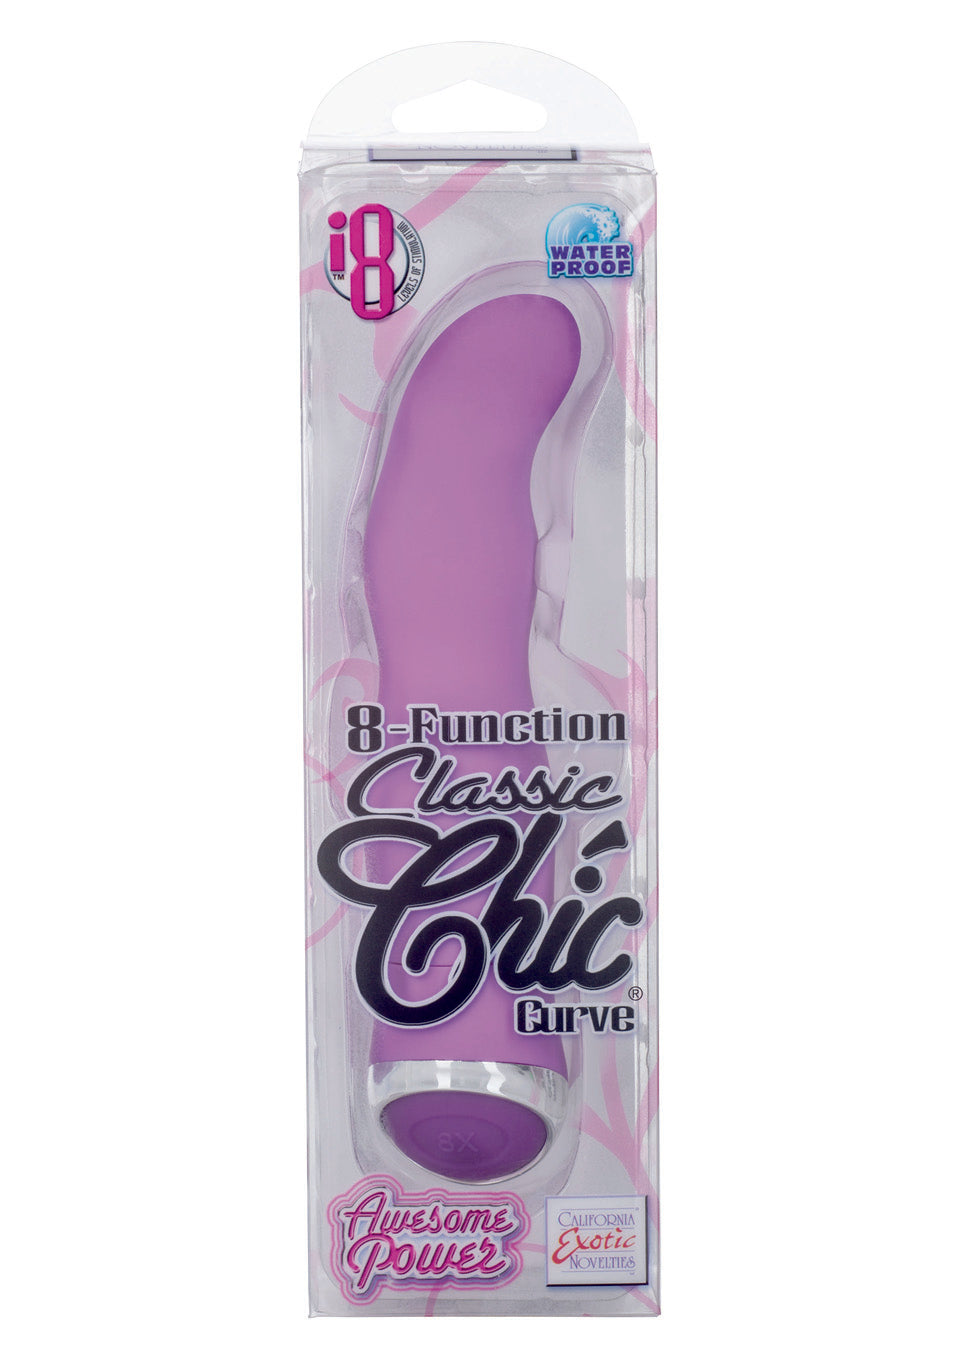 8-Function Classic Chic Curve-erotic-world-munchen.myshopify.com